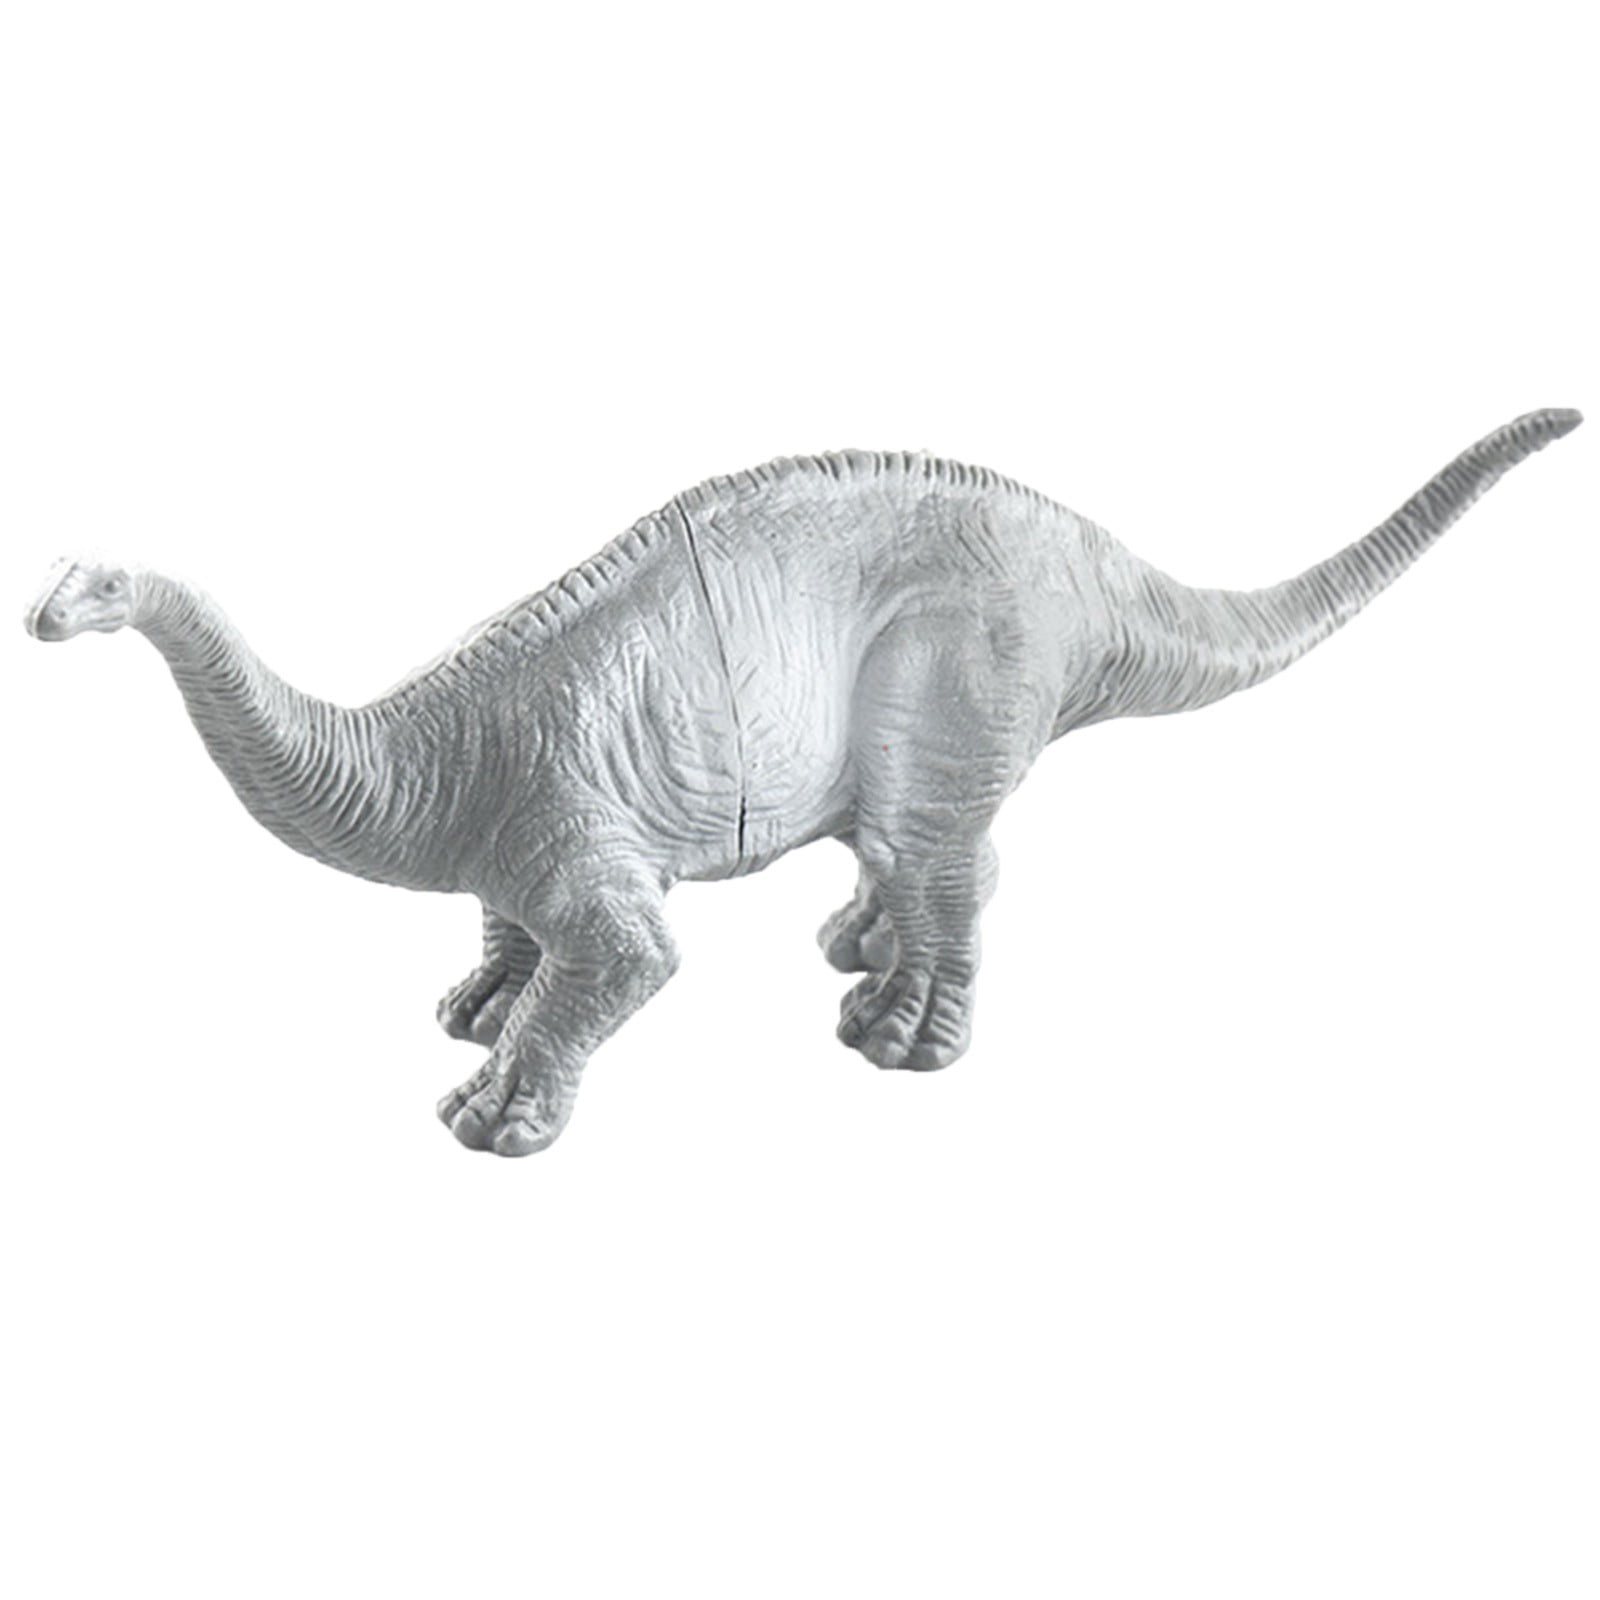 Details about   Indominus Rex Dinosaur Figure Simulation Educational Toys for Children 